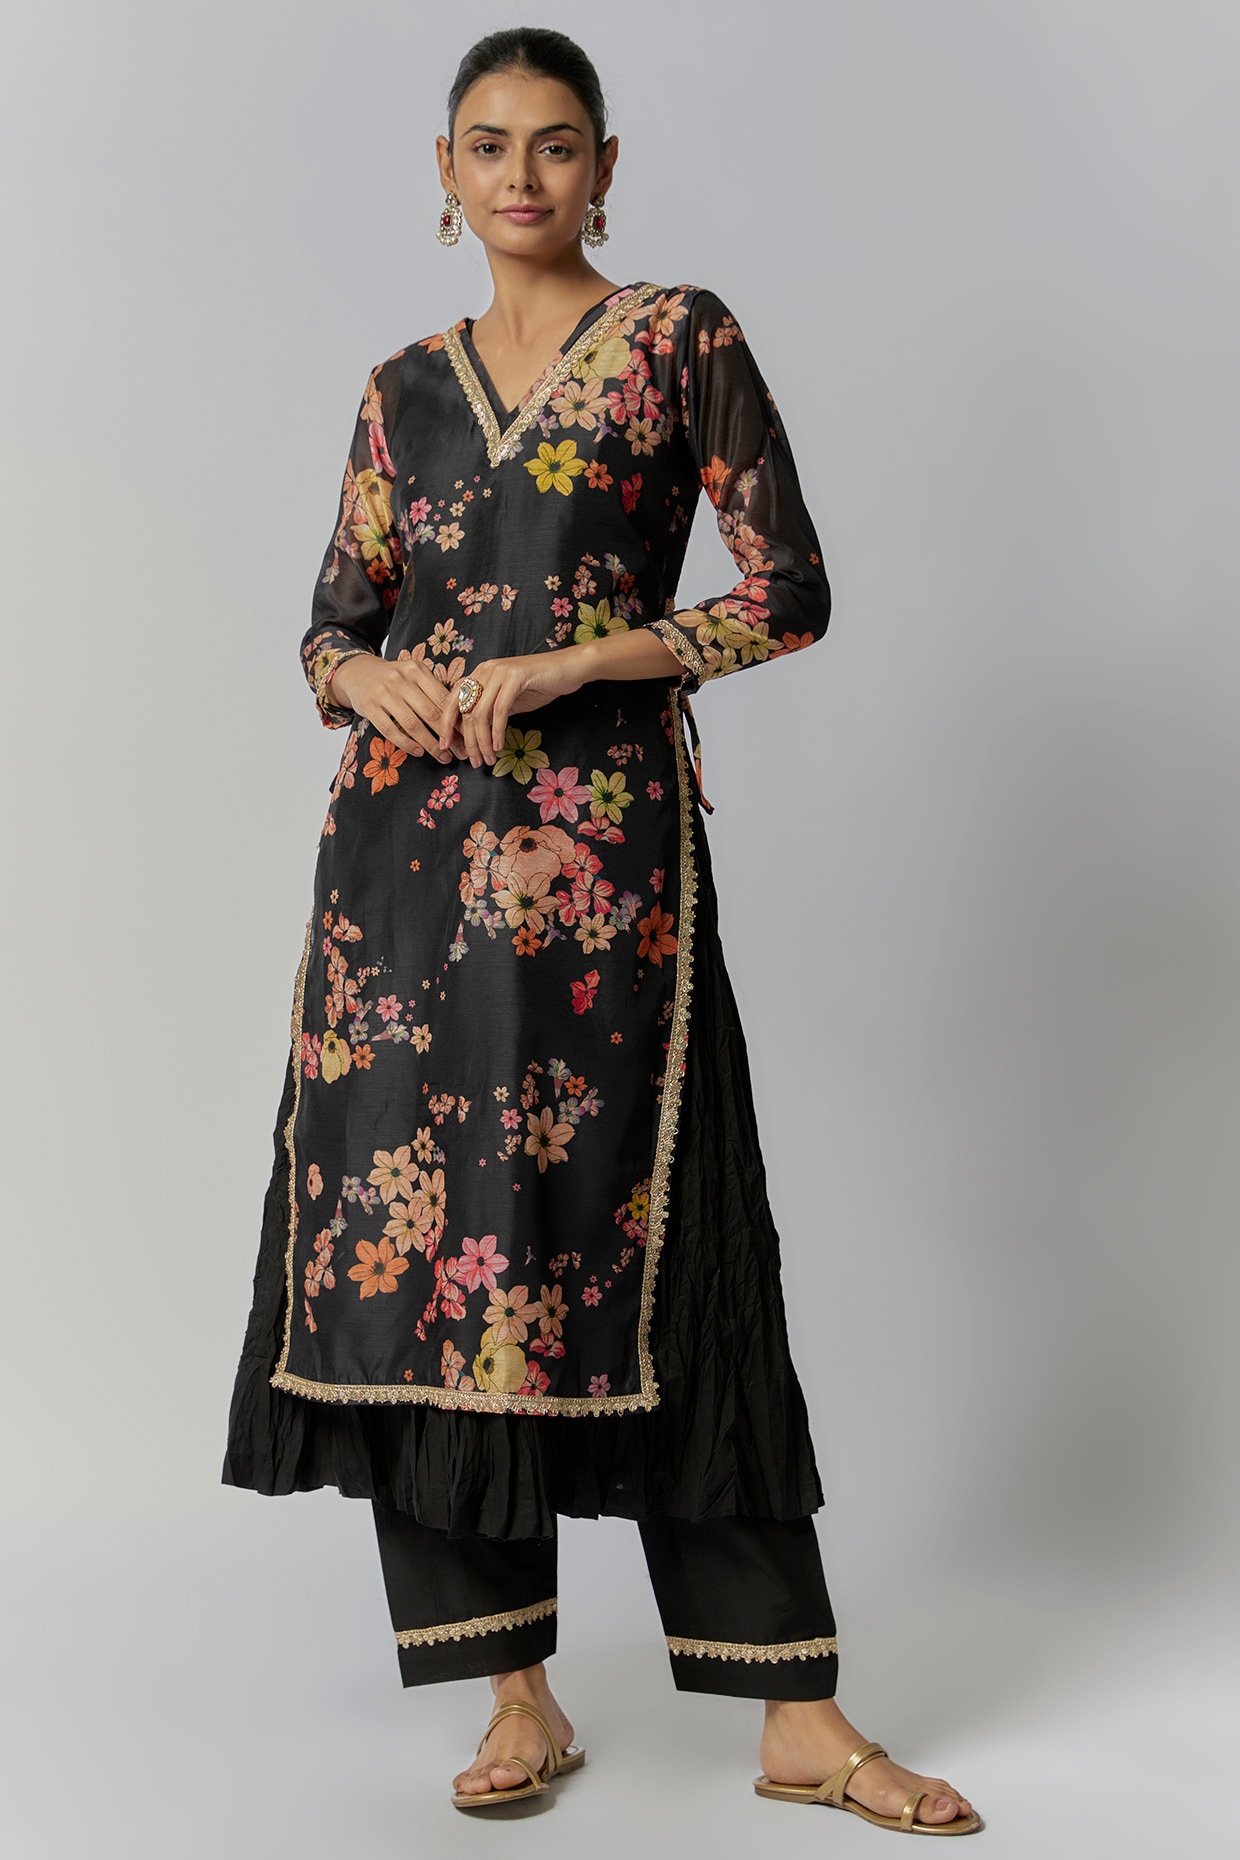 Buy RAMBHA Women's Lucknowi Chikankari Viscose Rayon Kurta, V-Neck & 3/4  Sleeve Black Casual wear Kurtis for Womens and Girls Size - M at Amazon.in